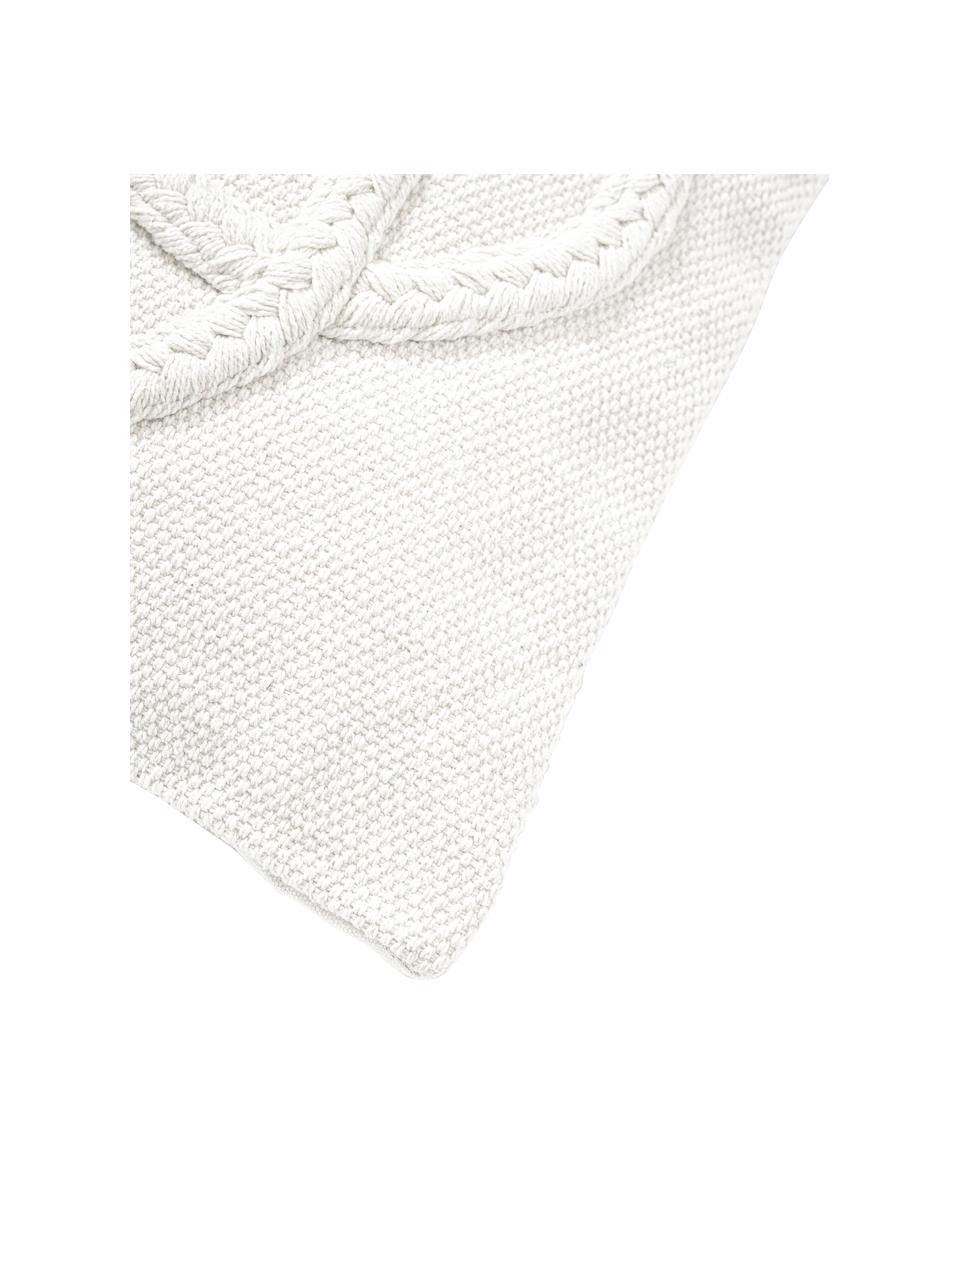 Povlaky na polštáře s vyšívanými detaily a třásněmi Laerke, 2 ks, 100 % bavlna, Krémově bílá, Š 45 cm, D 45 cm